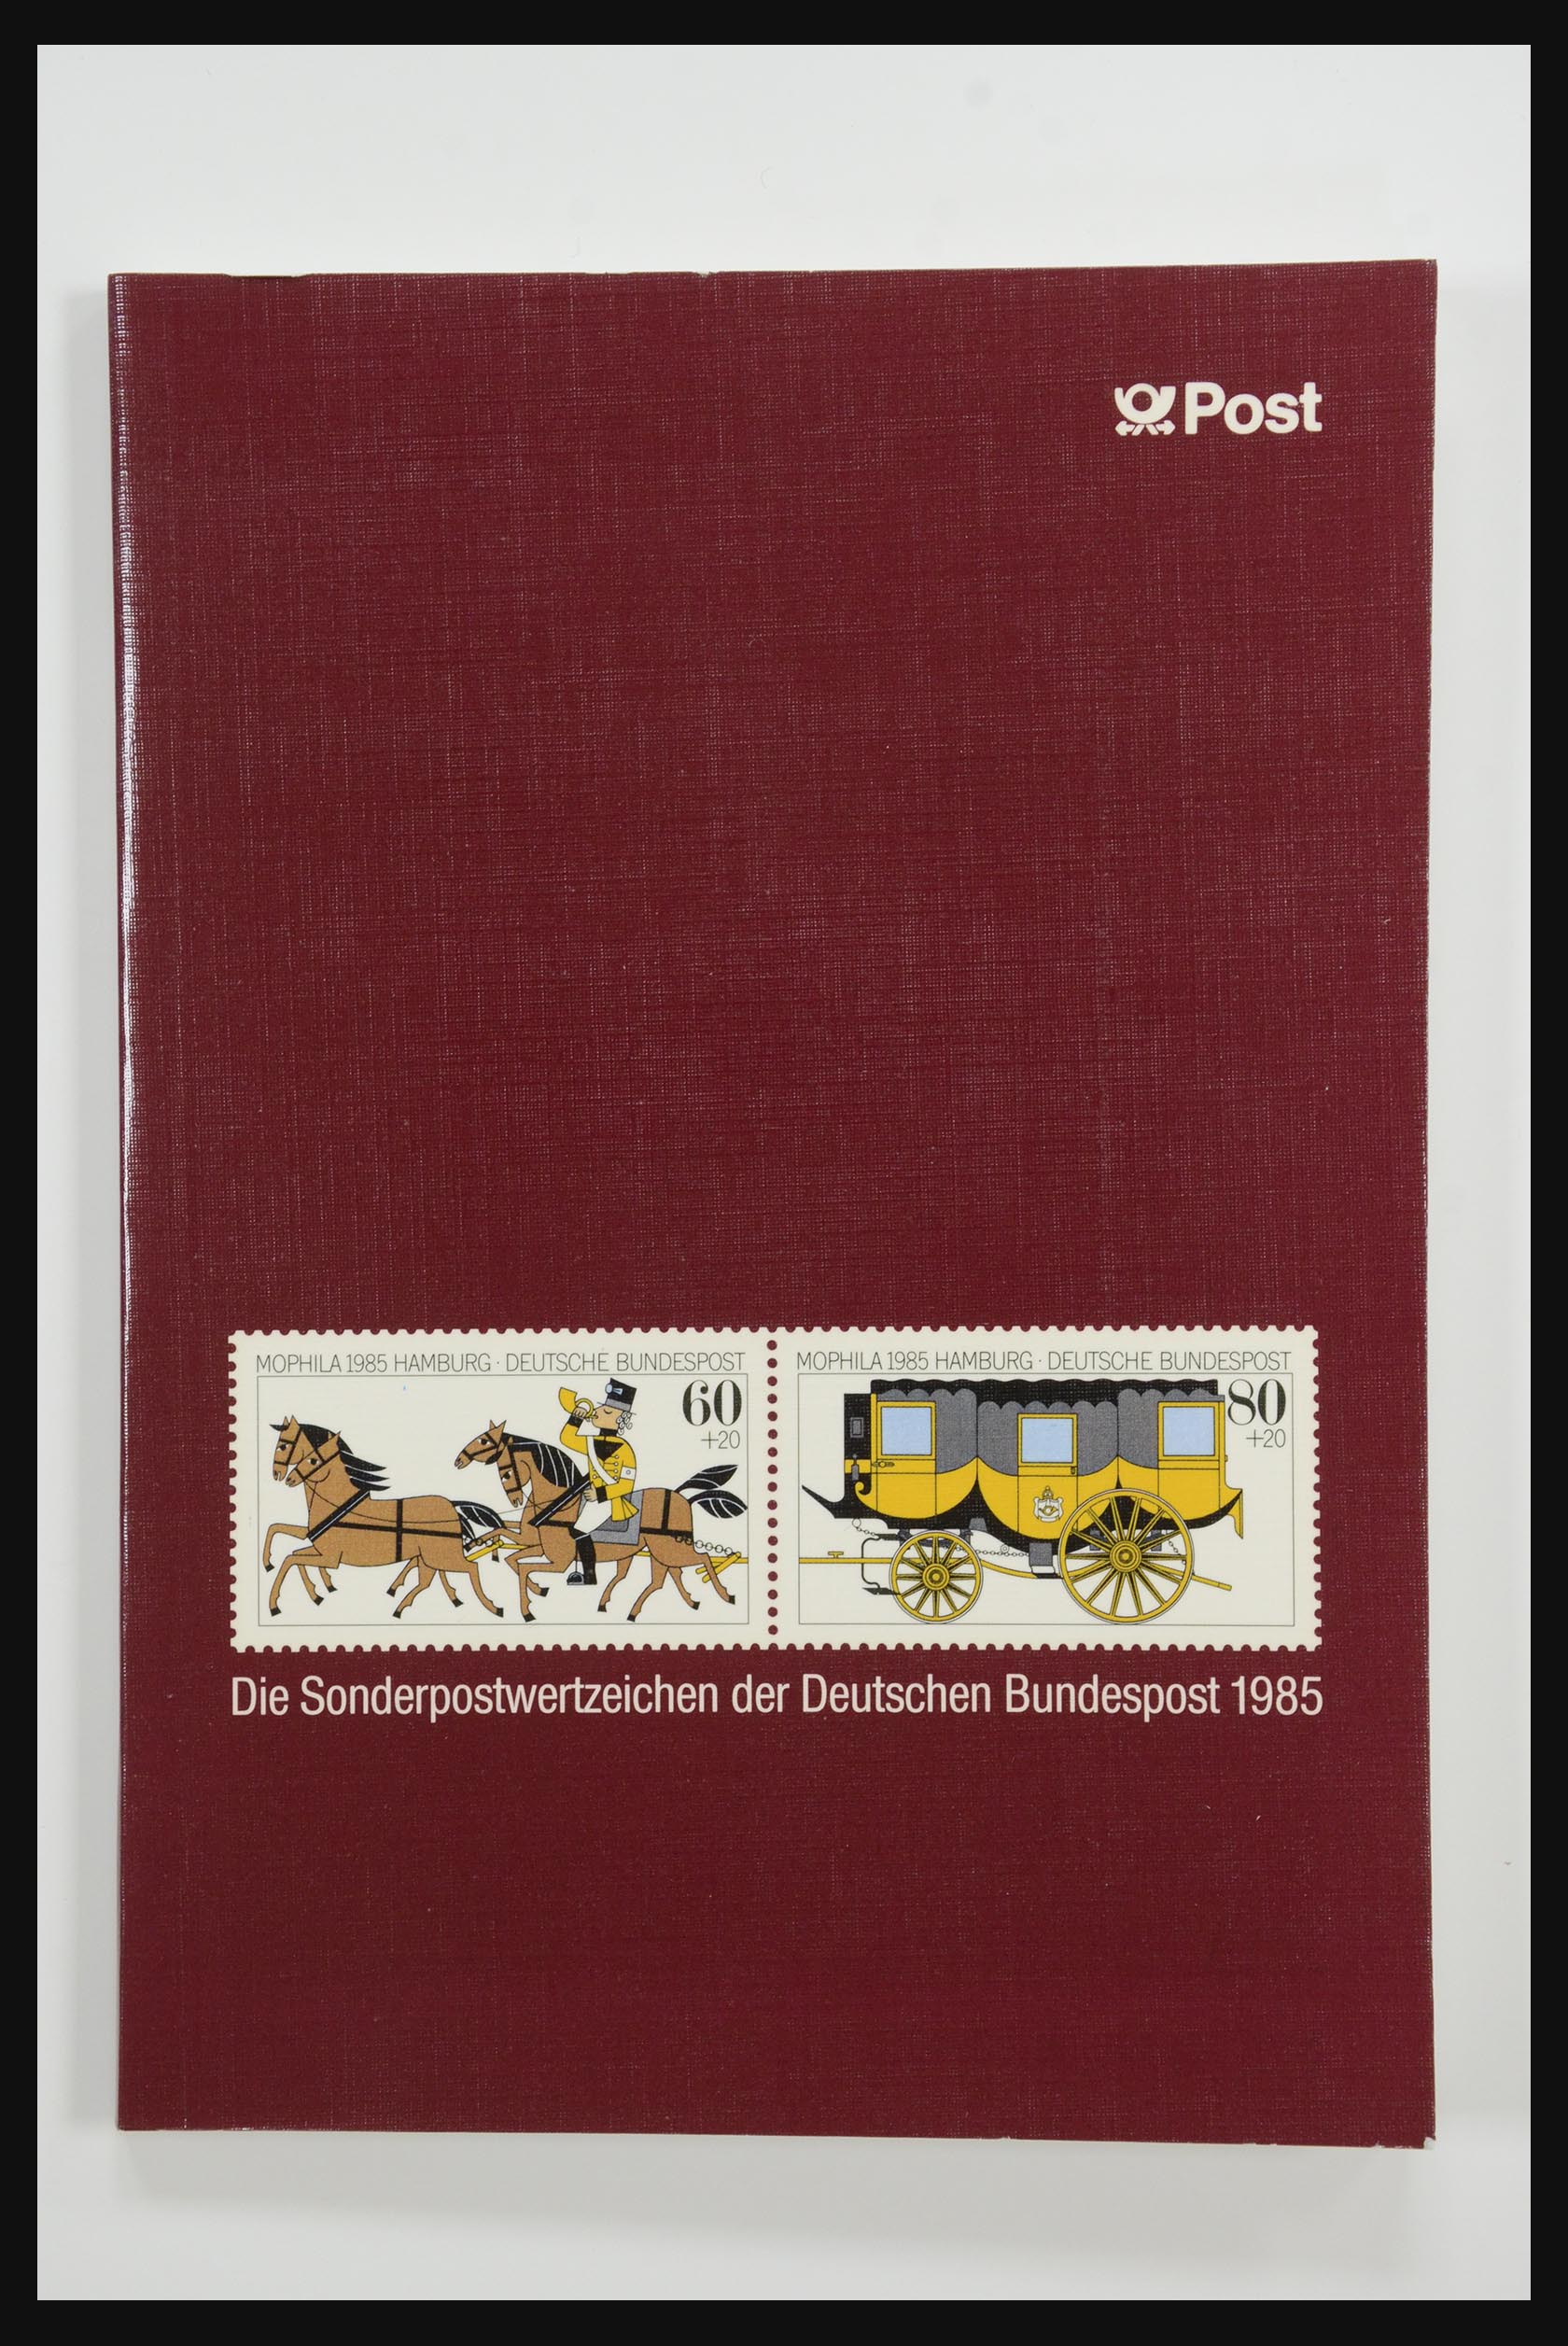 31836 014 - 31836 Bundespost yearbooks 1974-1999.